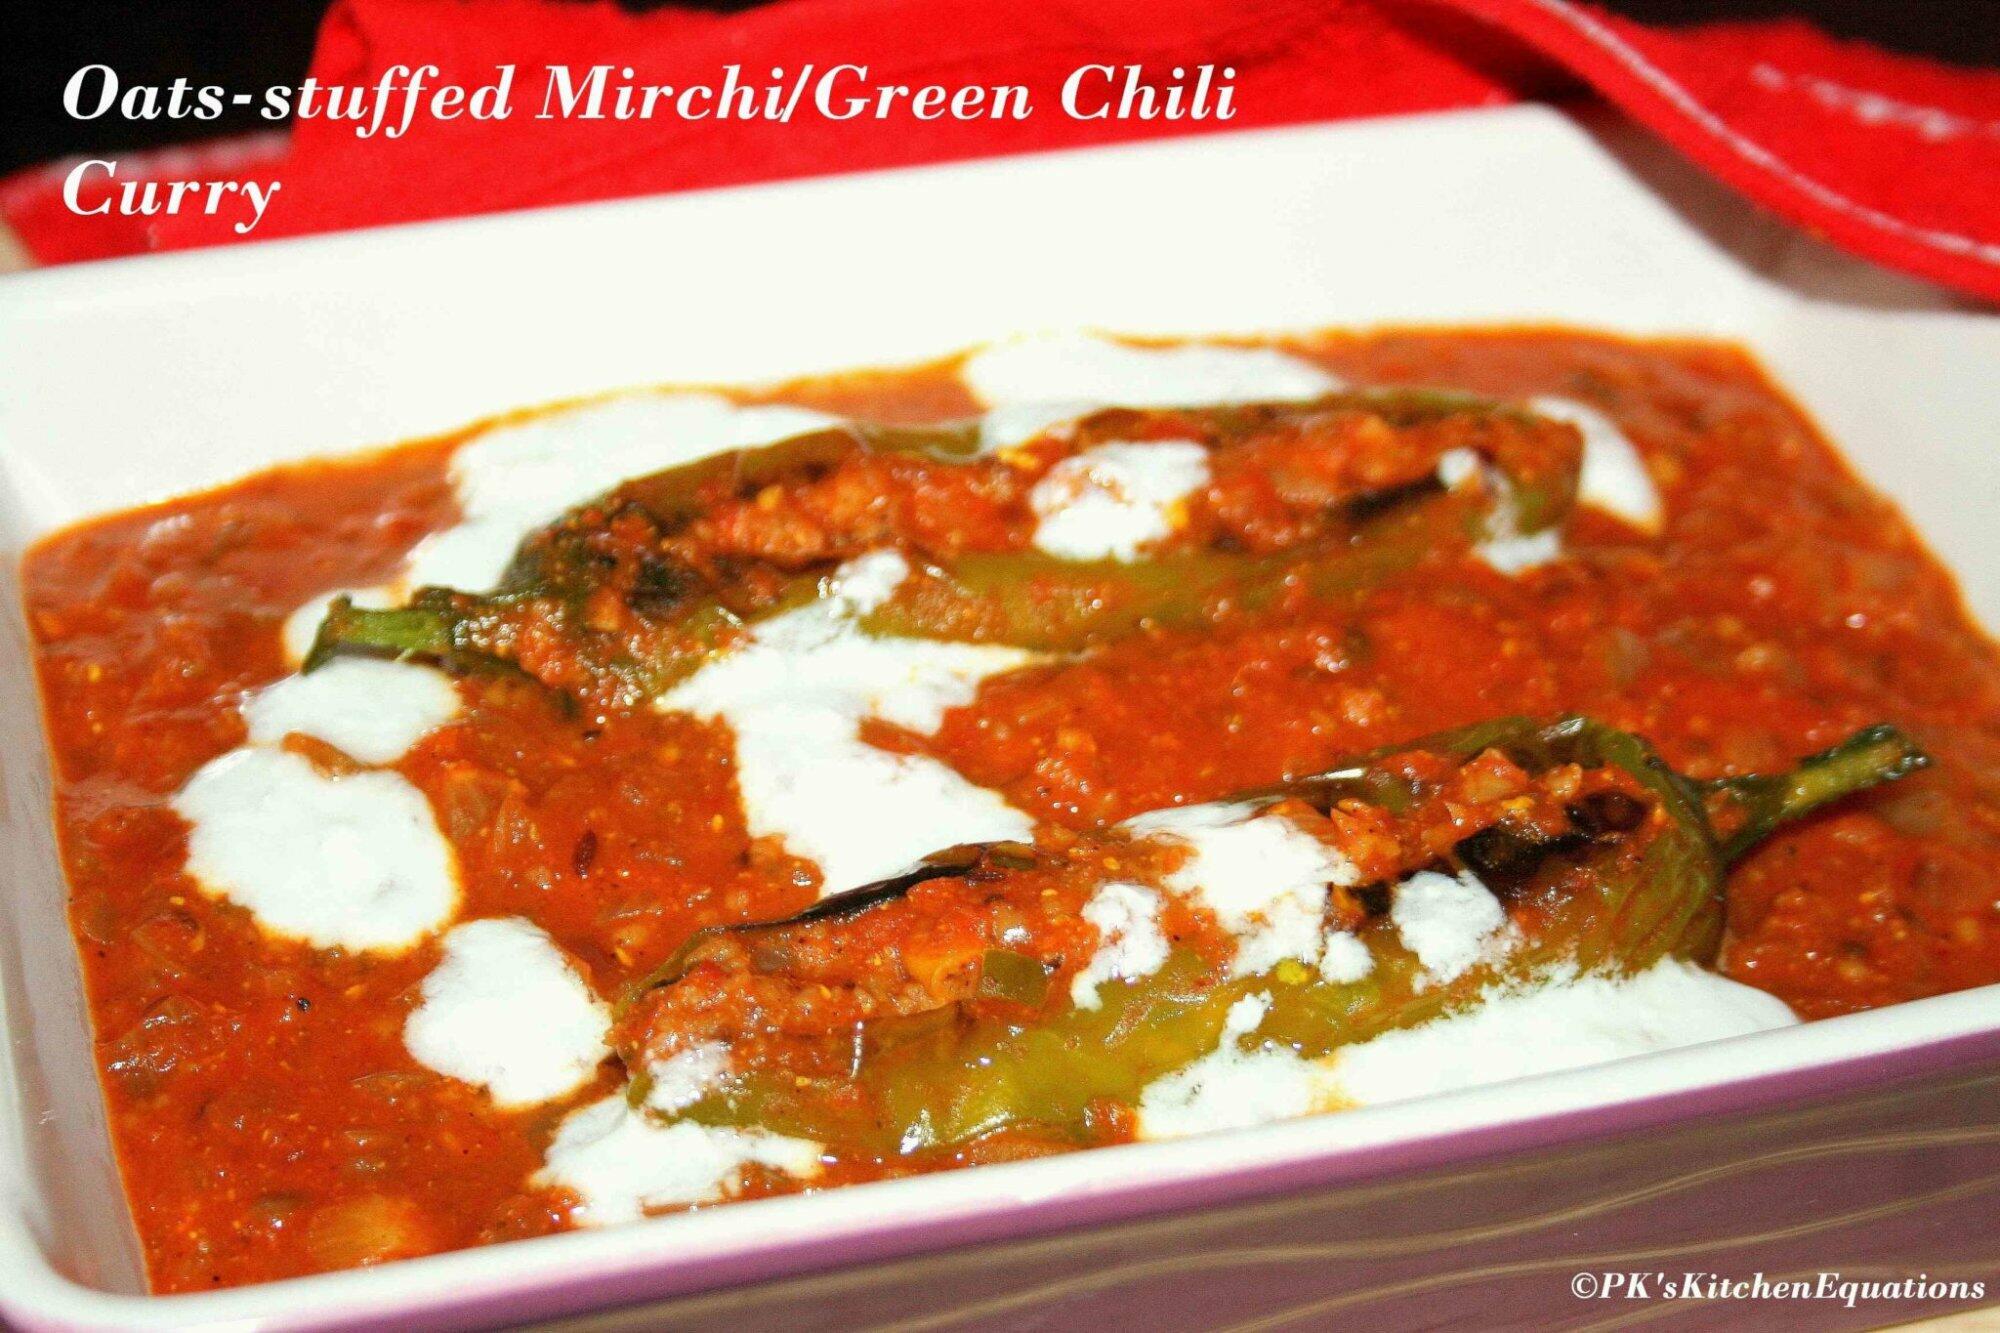 Oats-stuffed Mirchi/Green Chili Curry